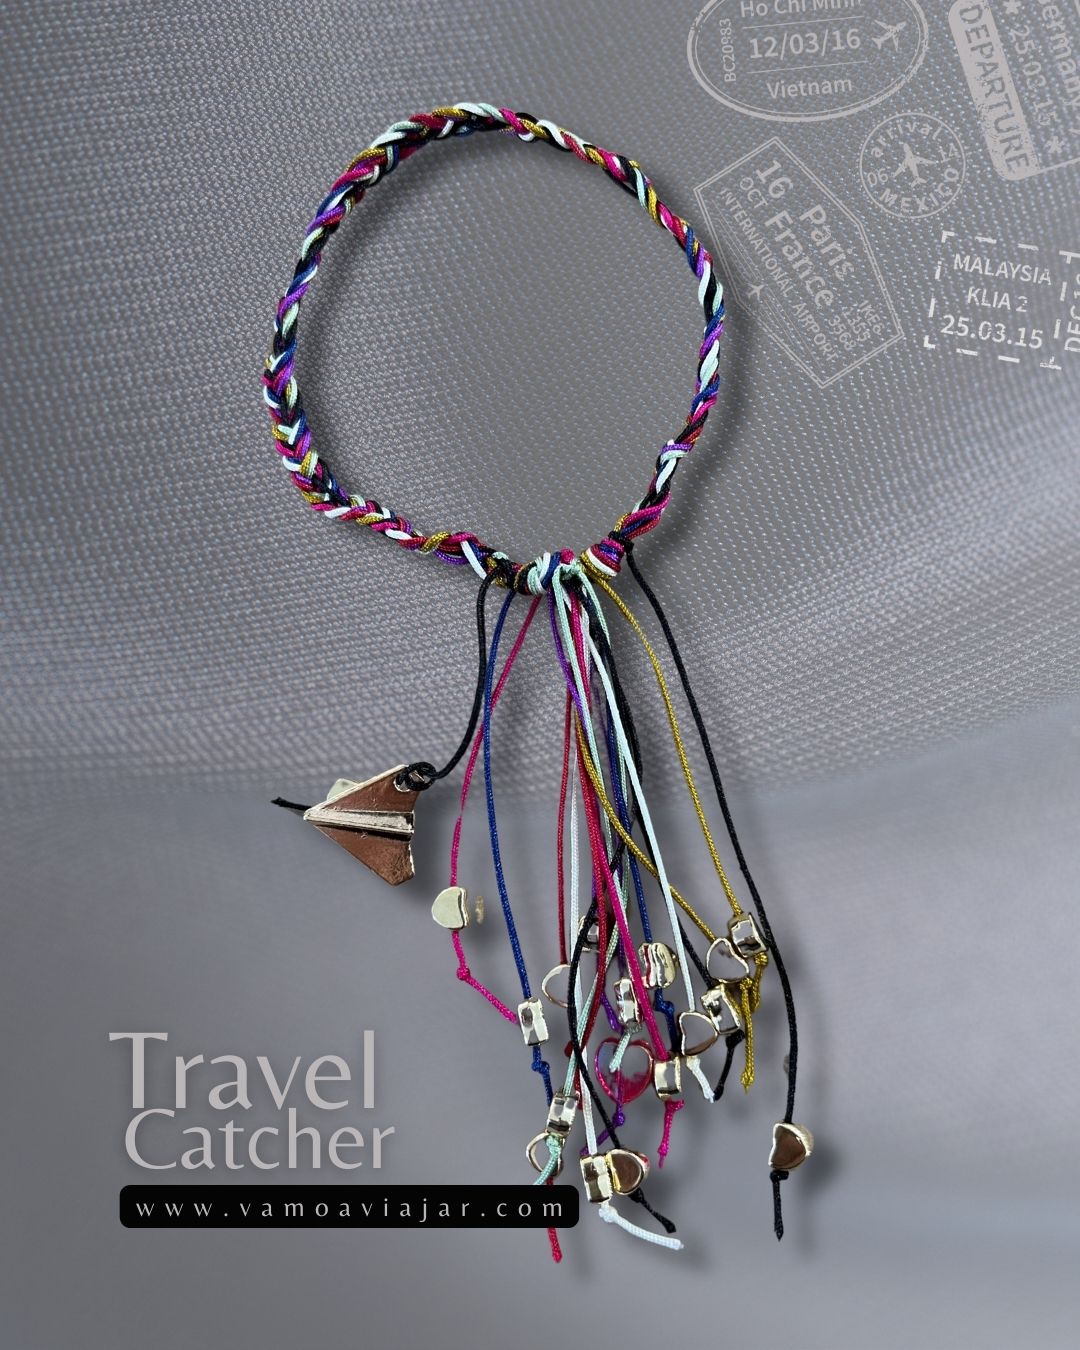 Bracelet: Travel Catcher